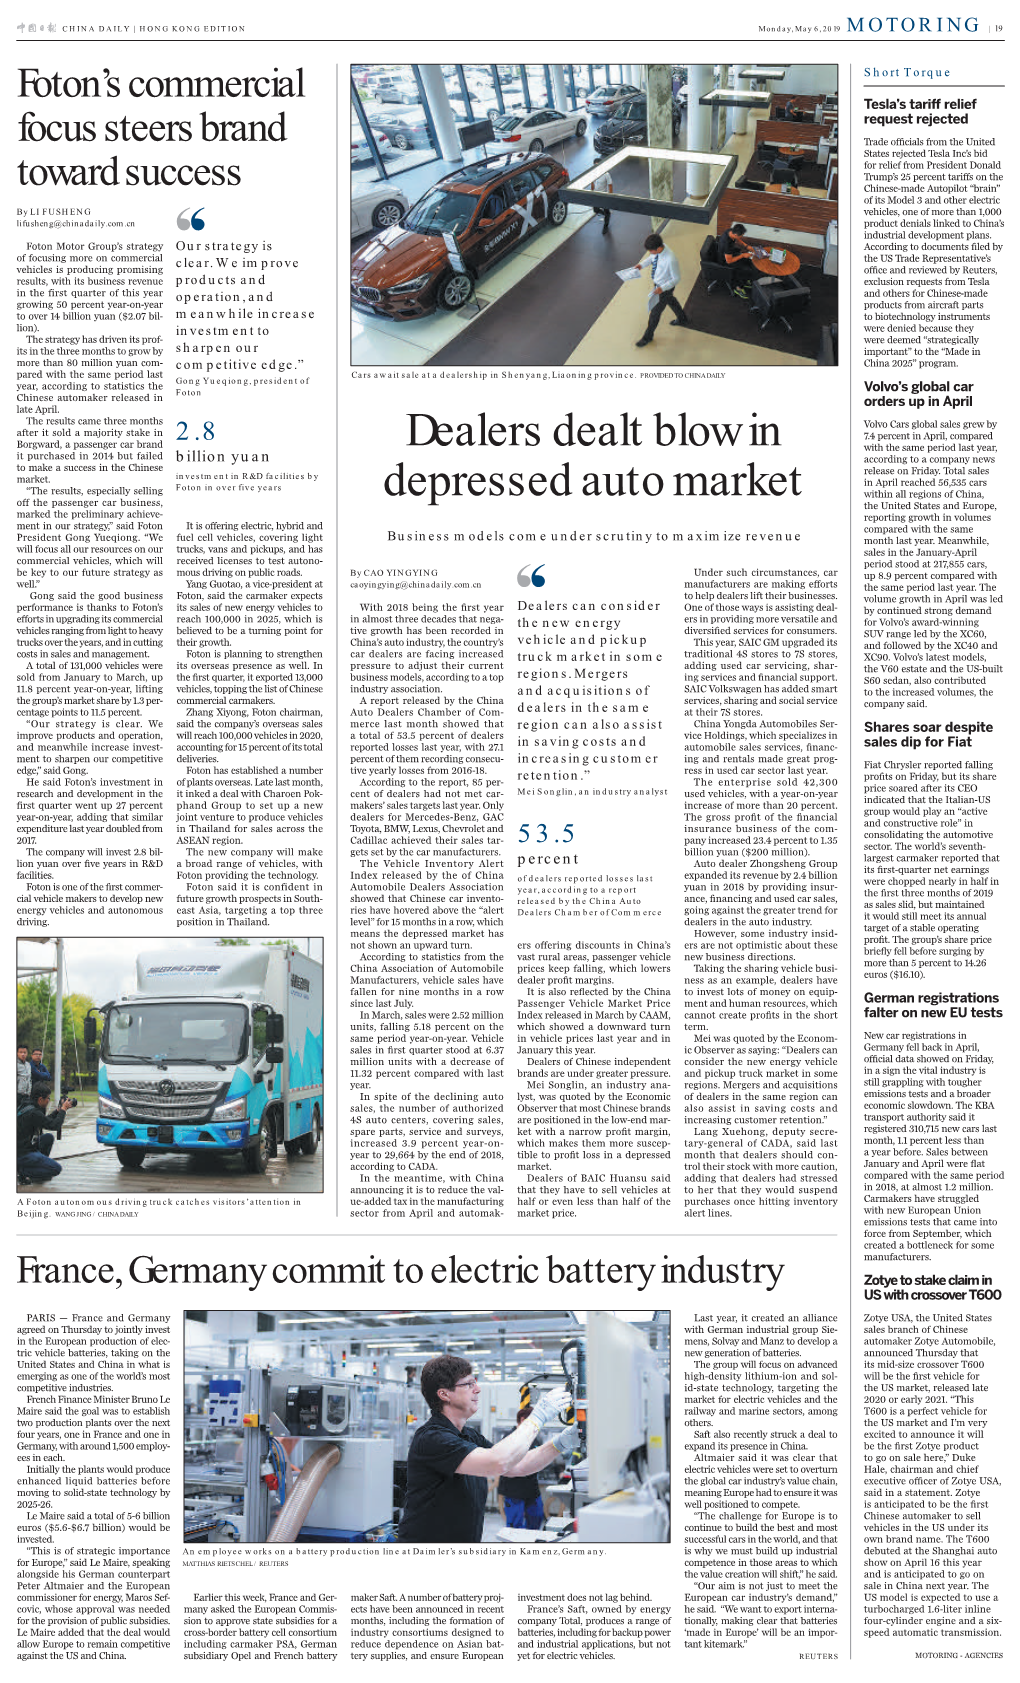 Dealers Dealt Blow in Depressed Auto Market